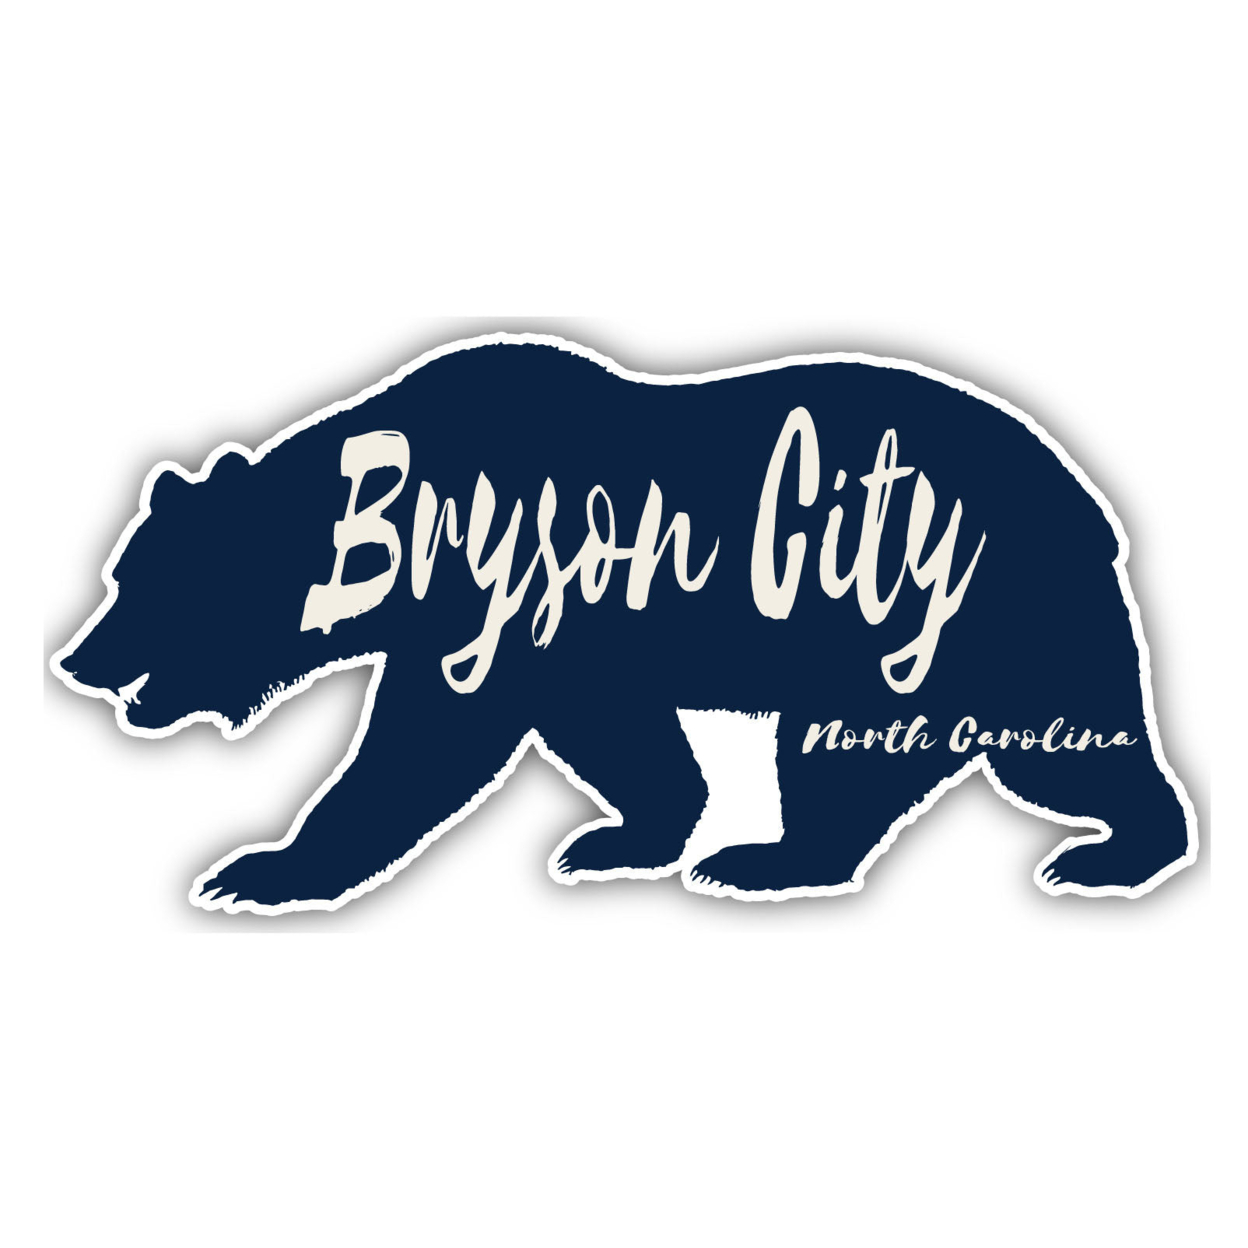 Bryson City North Carolina Souvenir Decorative Stickers (Choose Theme And Size) - 4-Pack, 4-Inch, Bear